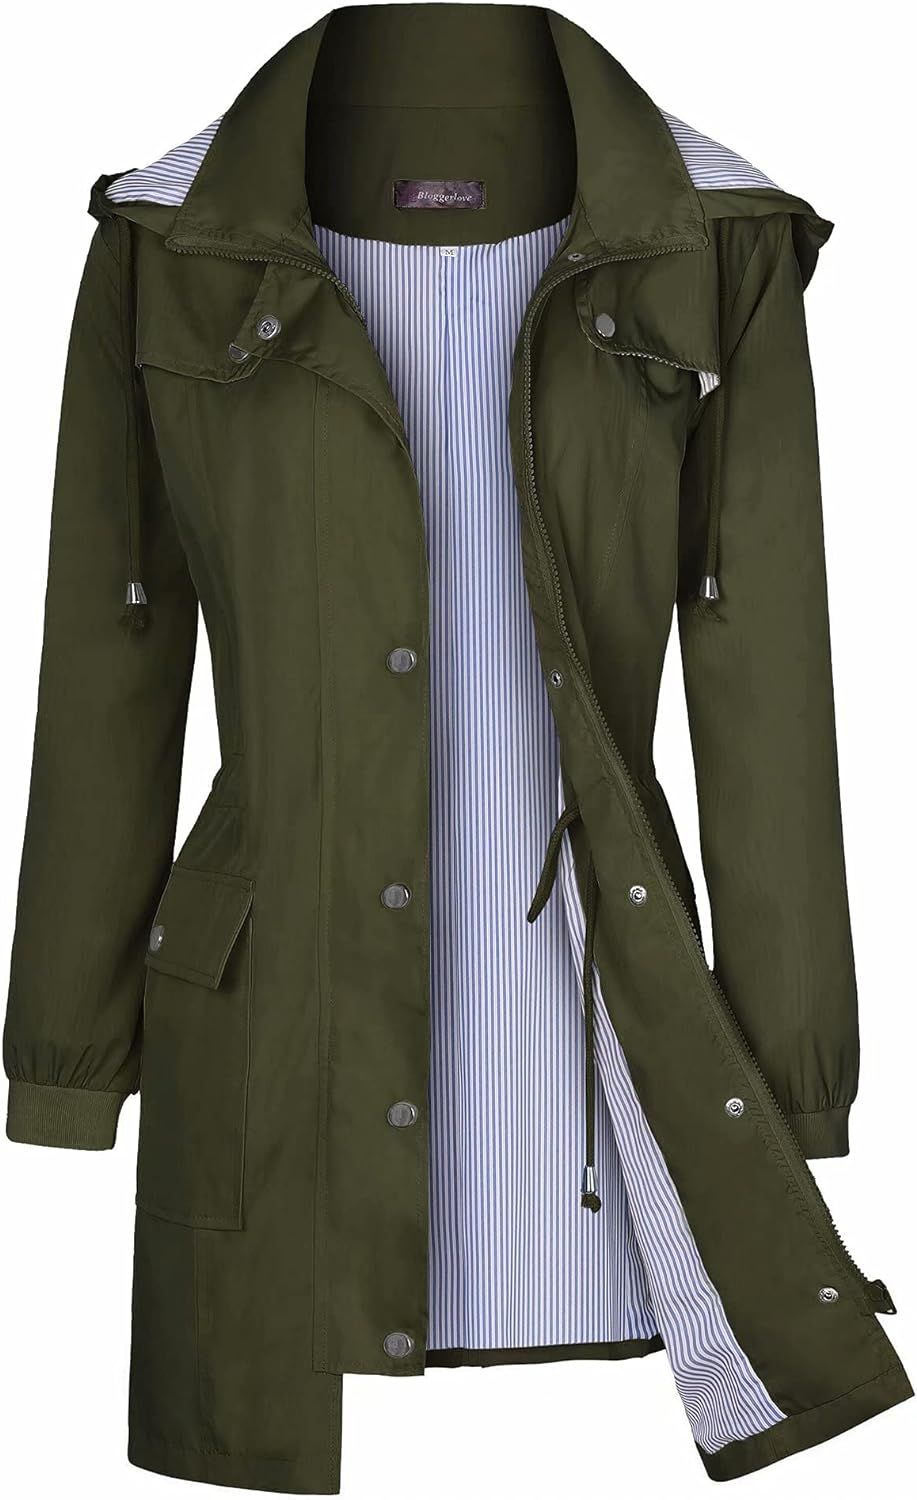 Bloggerlove Women's Raincoats Windbreaker Rain Jacket Waterproof Lightweight Outdoor Hooded Trenc... | Amazon (US)